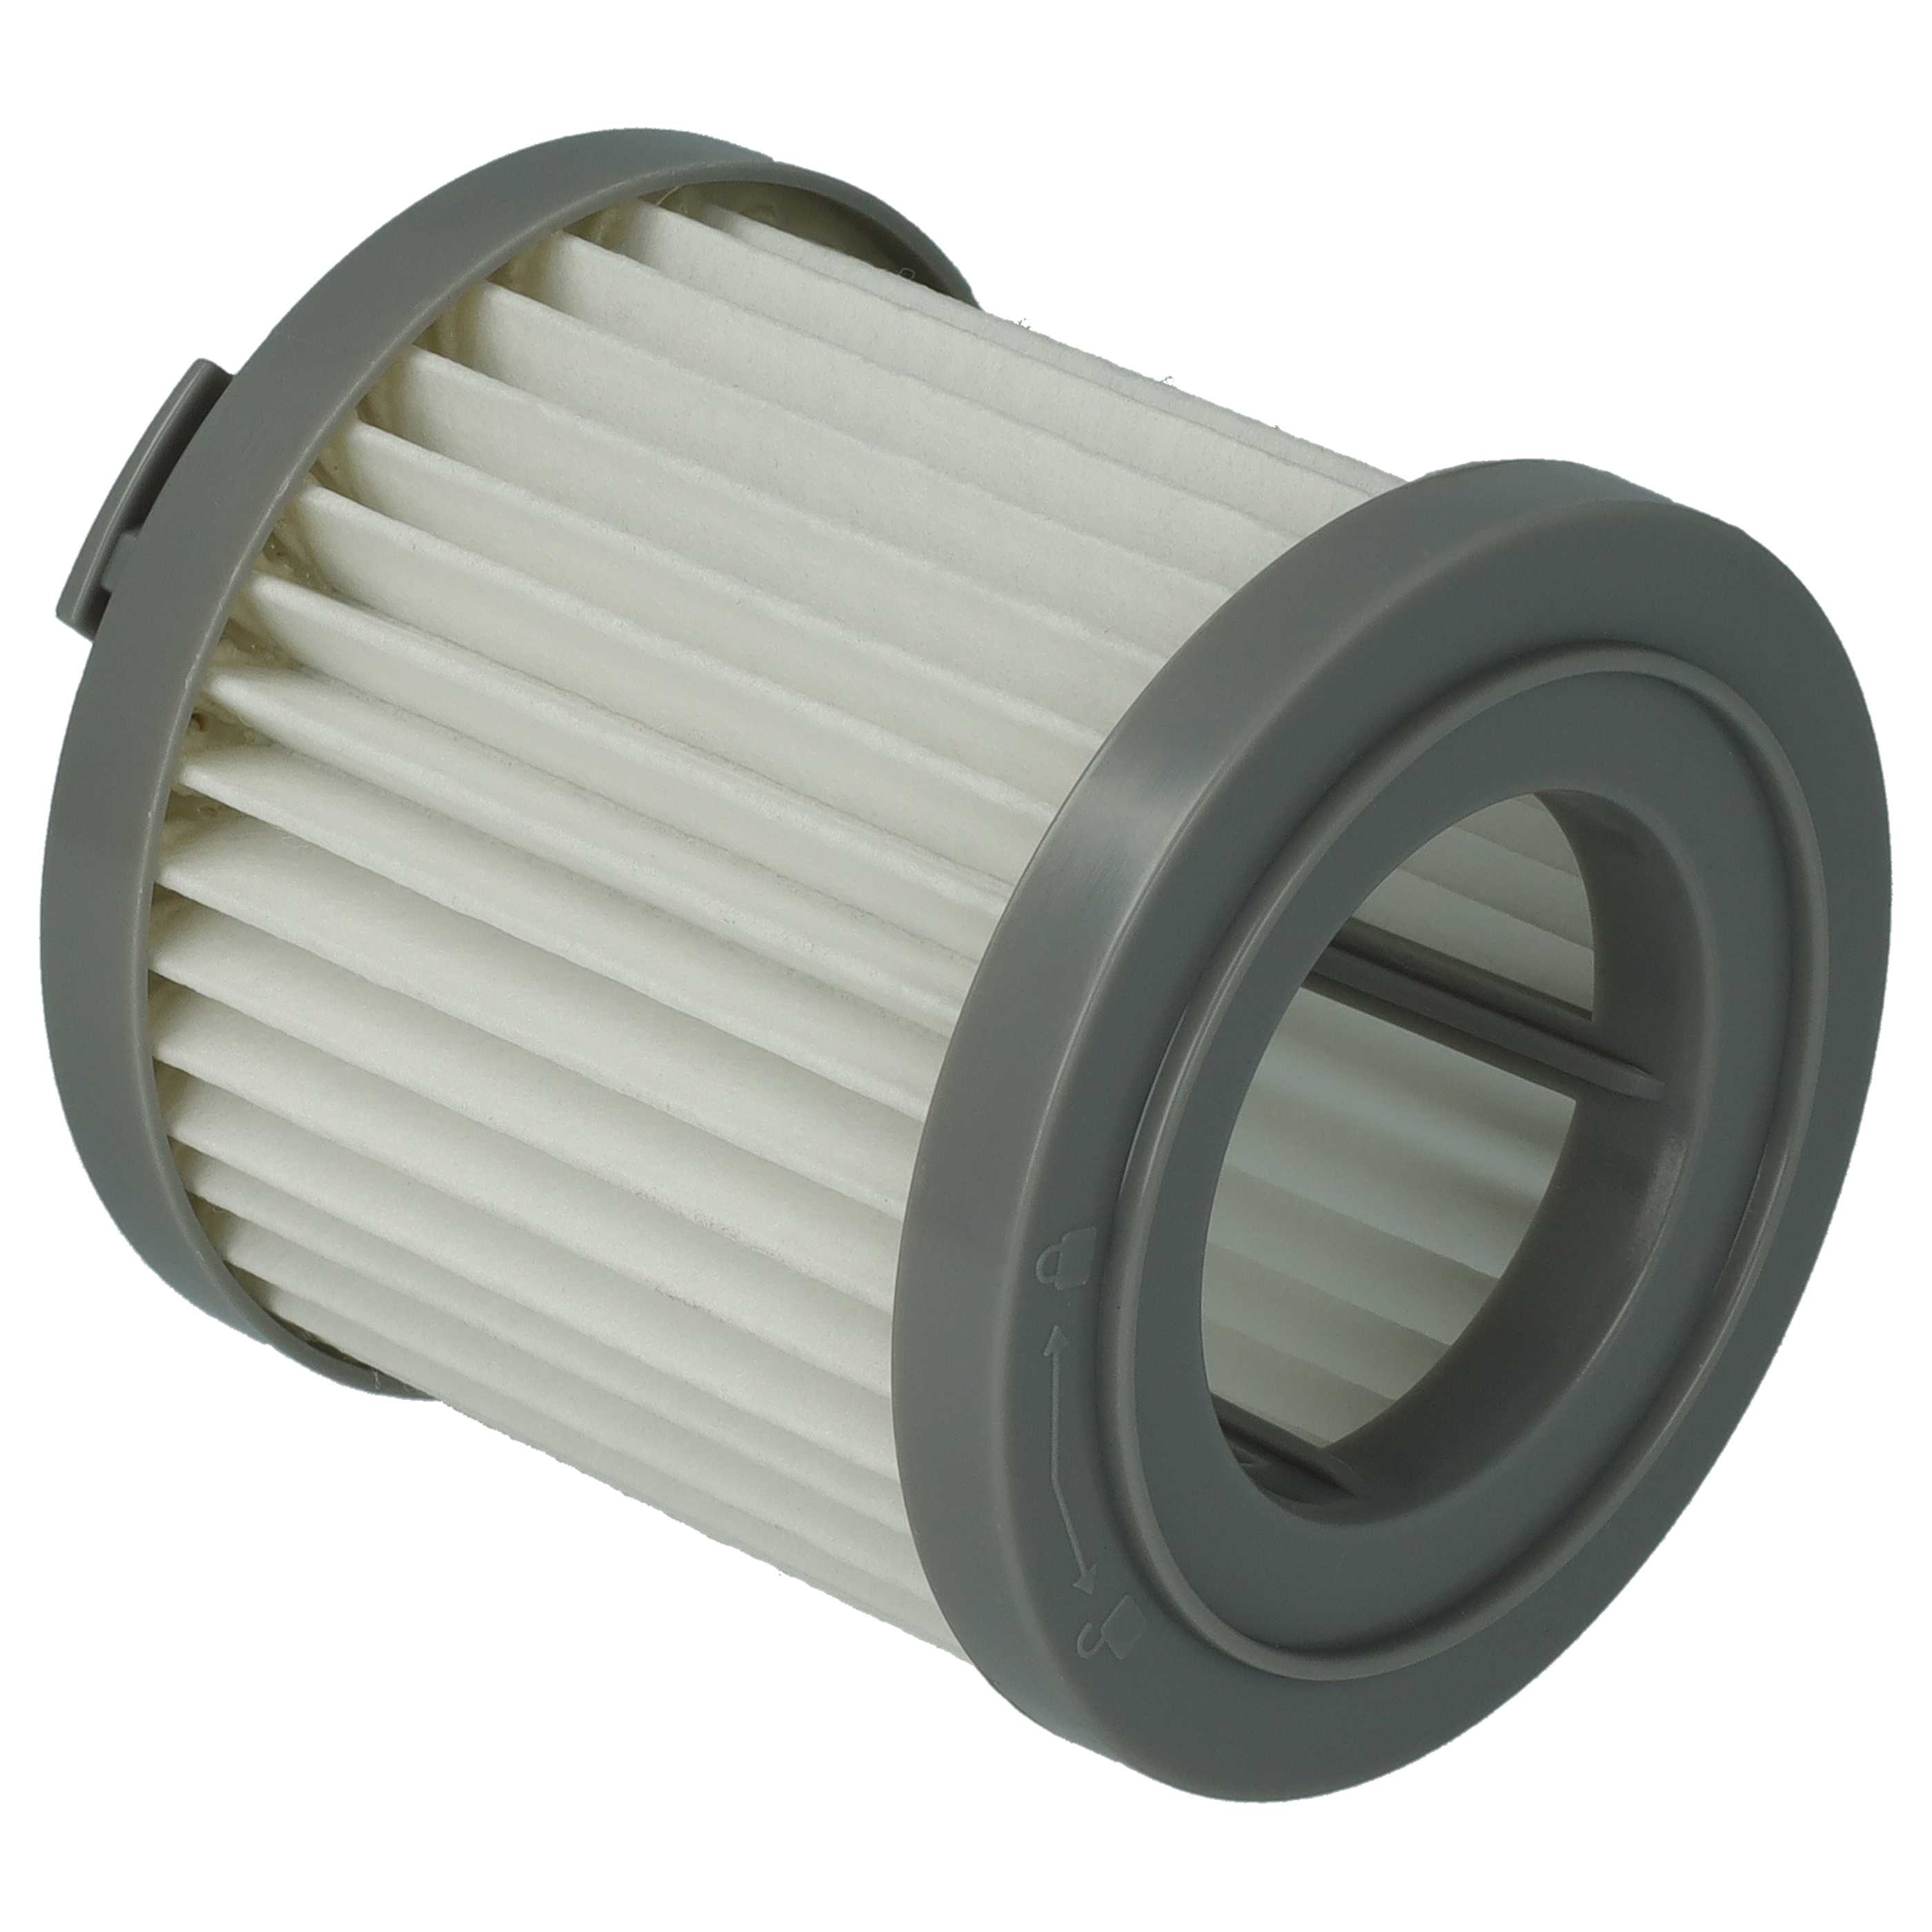 1x HEPA filter replaces AEG 4055453288 for AEG Vacuum Cleaner, white / grey